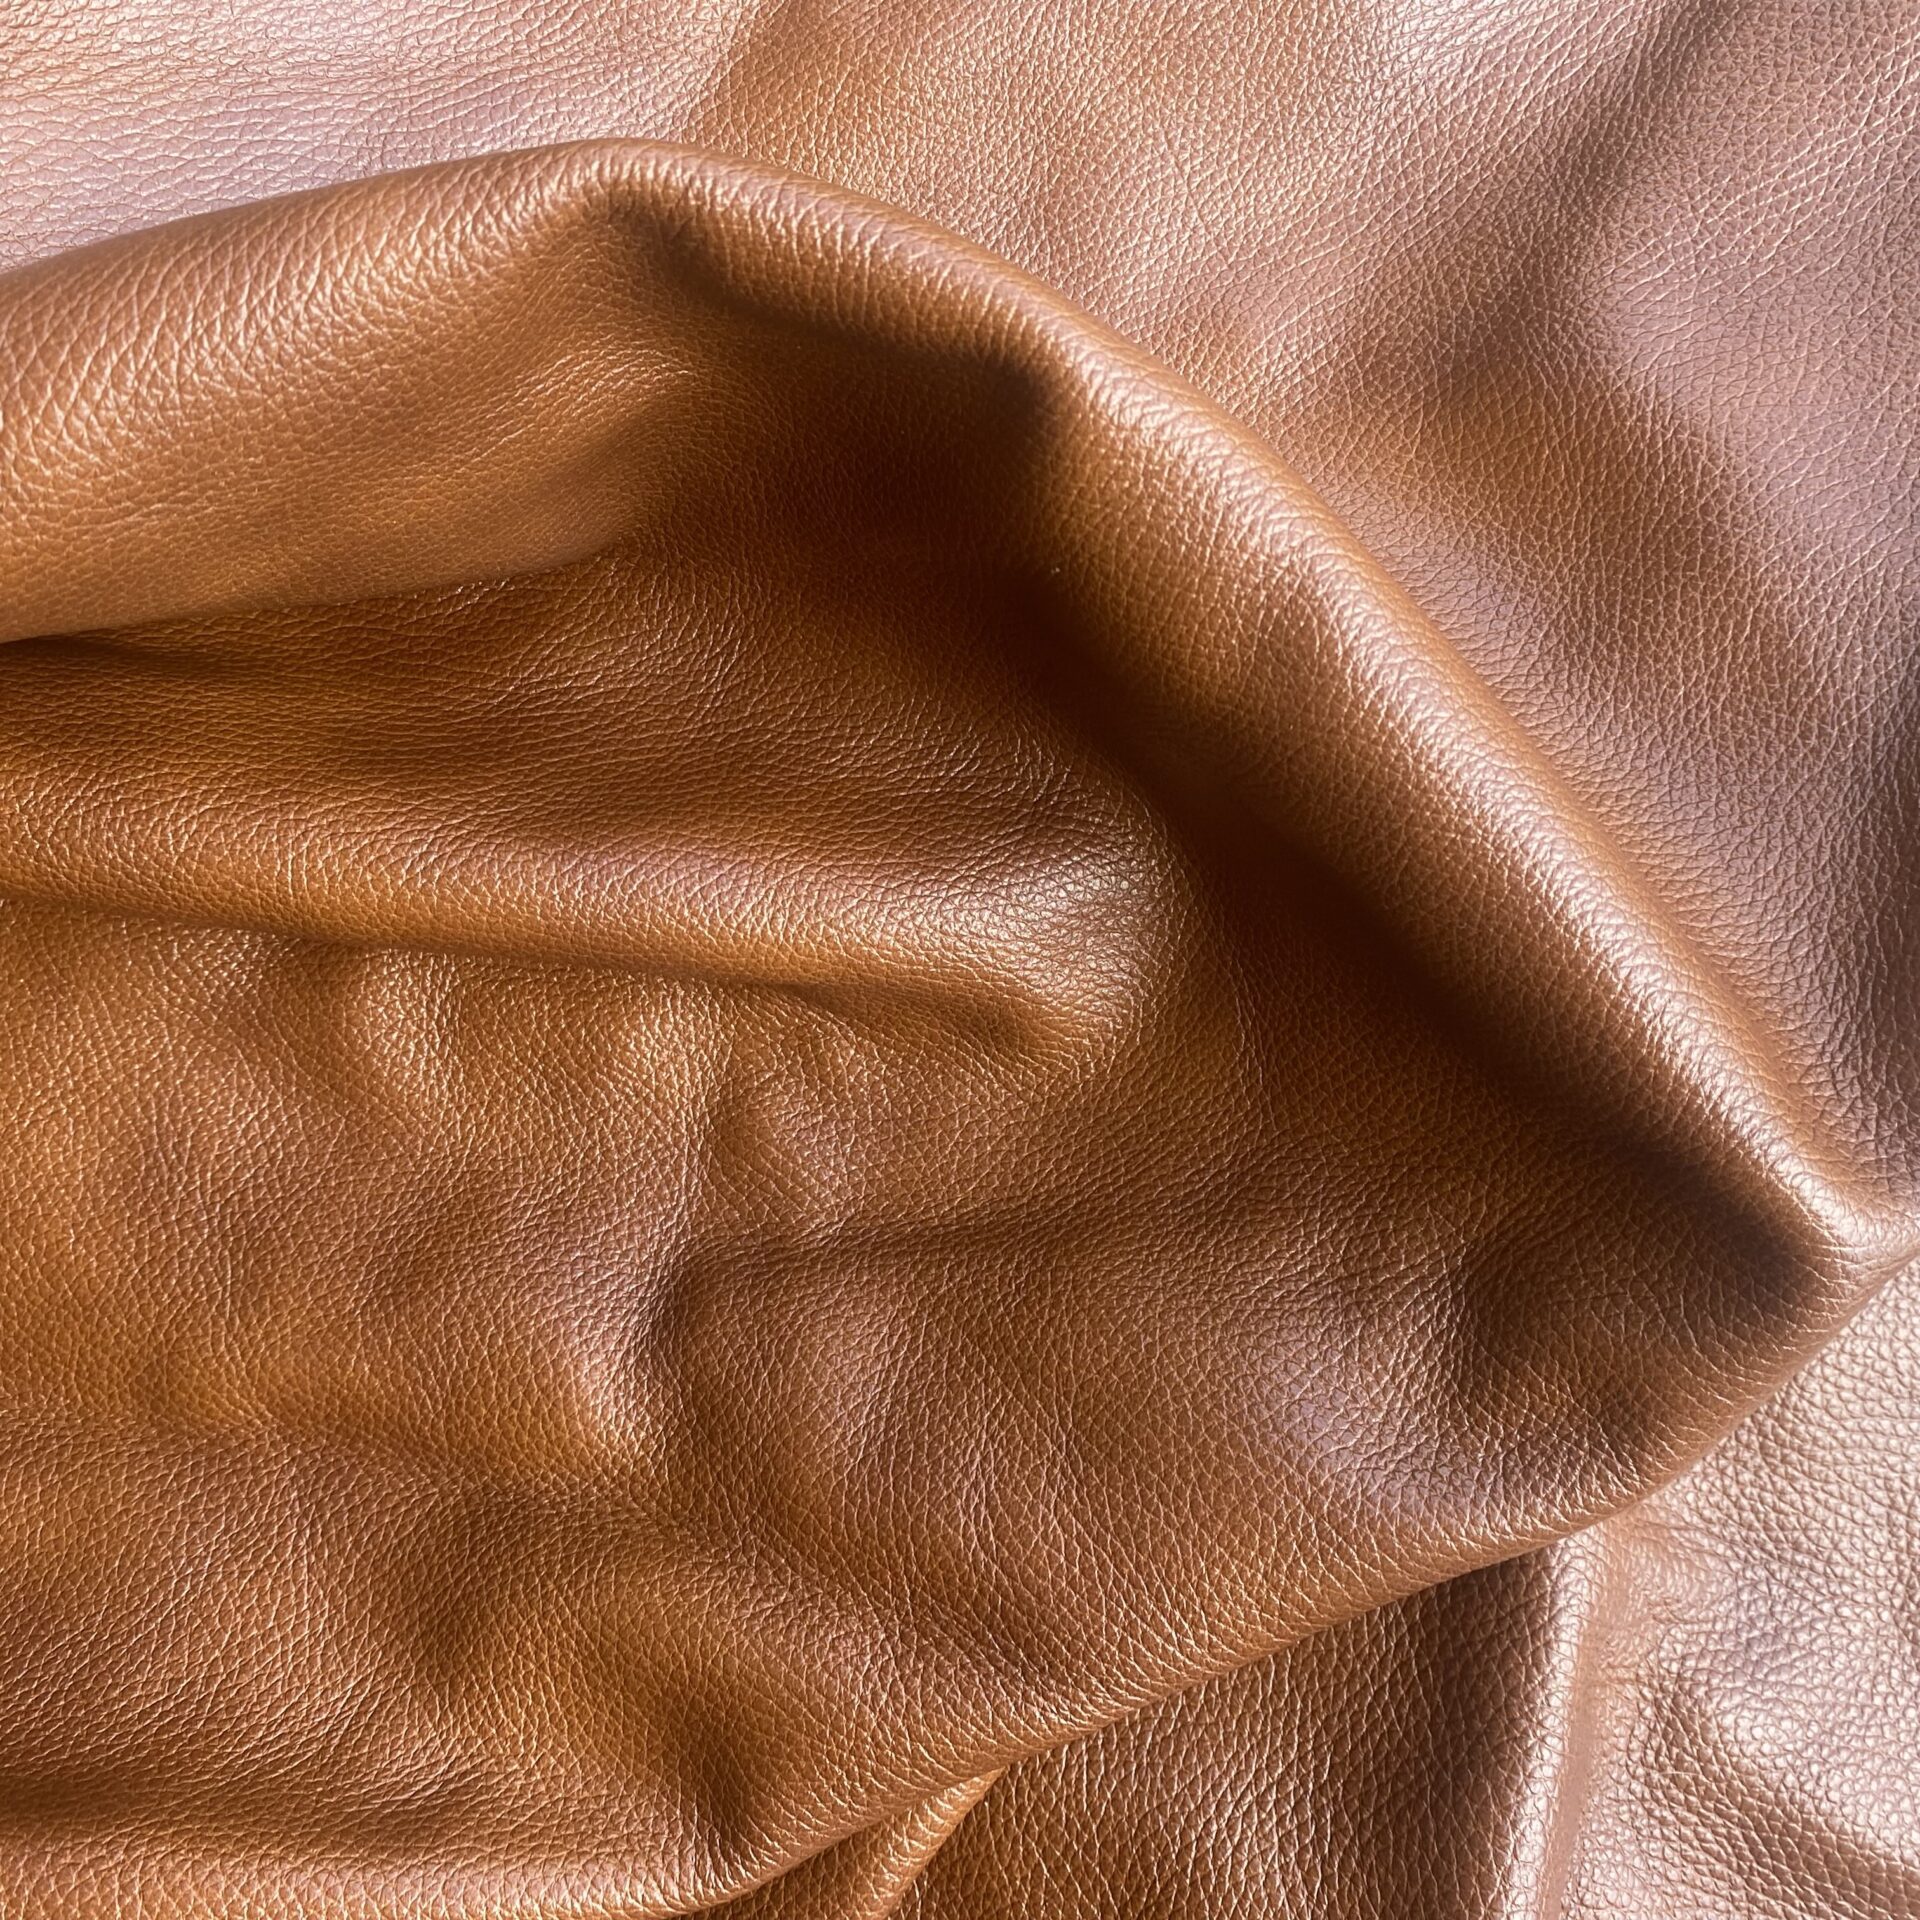 Buy Italian Leather Brown Online